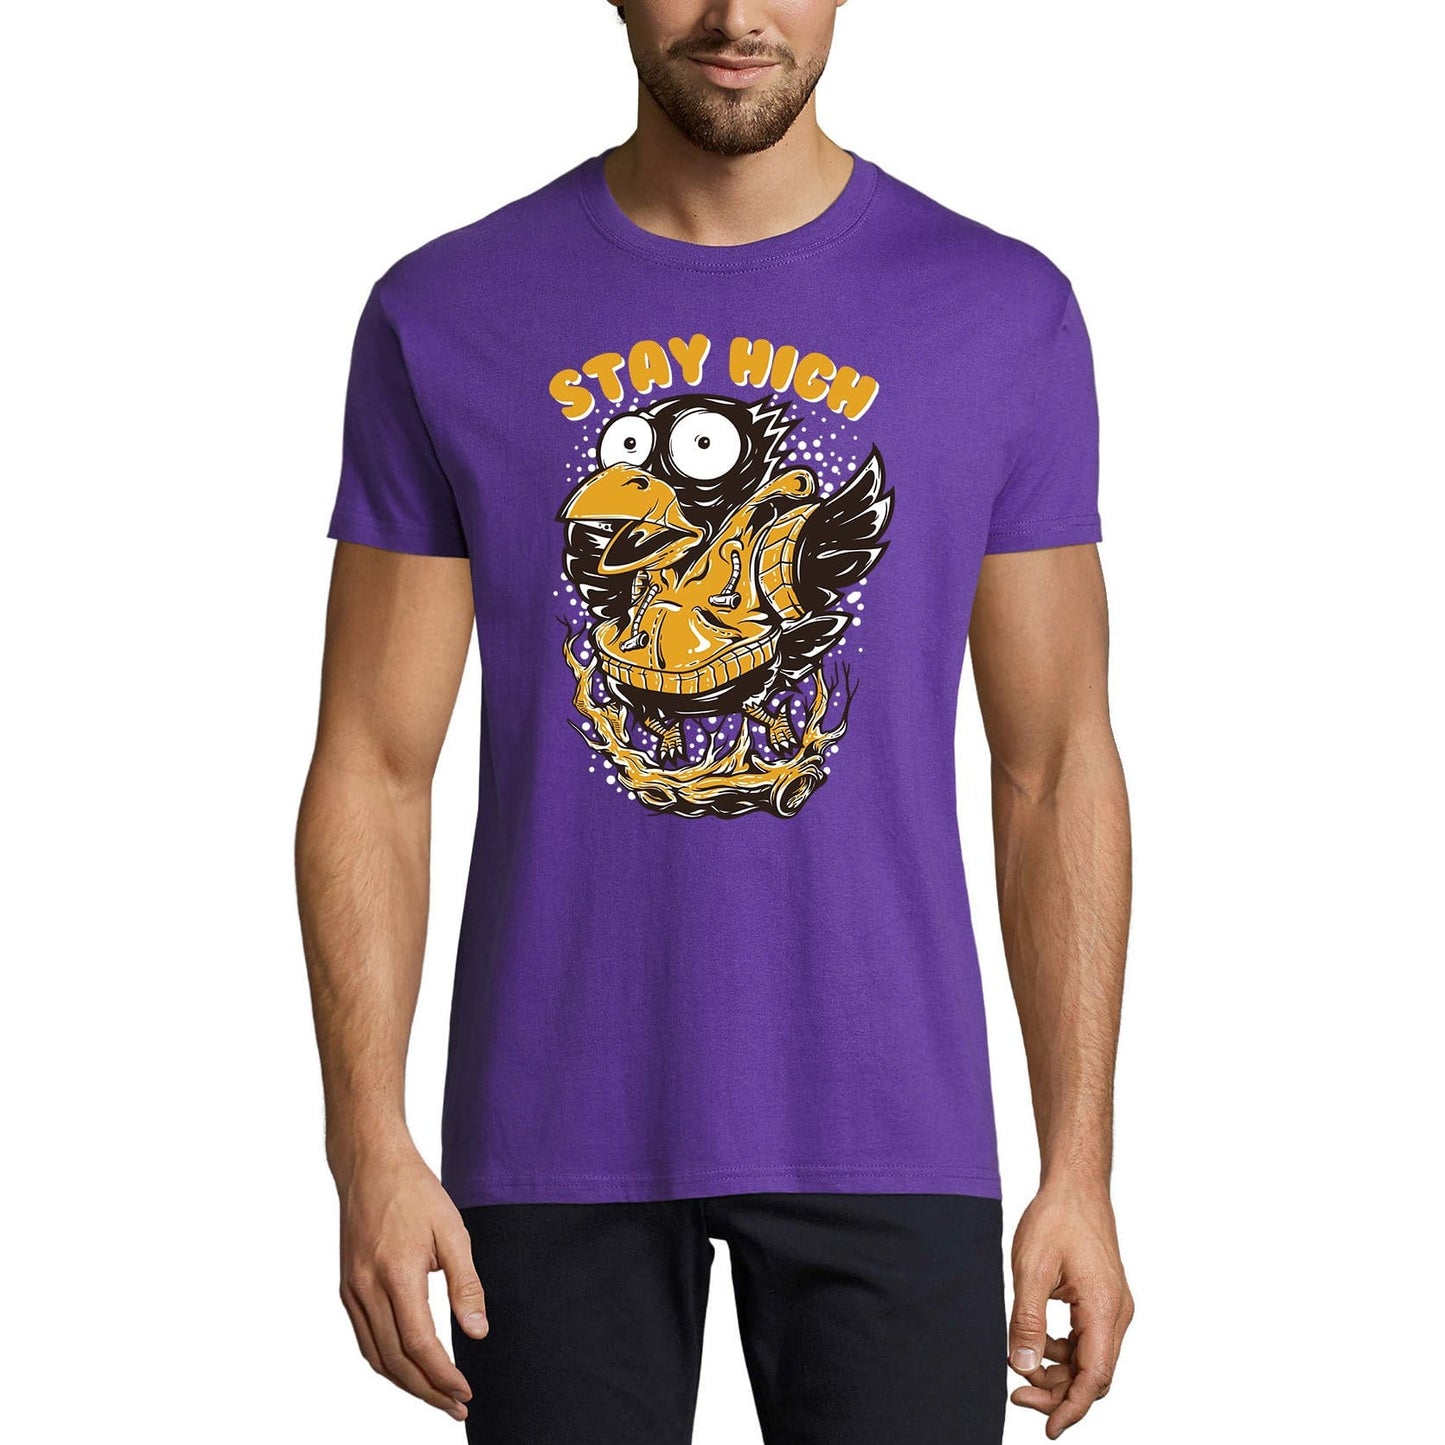 ULTRABASIC Men's Novelty T-Shirt Stay High - Funny Animal Tee Shirt